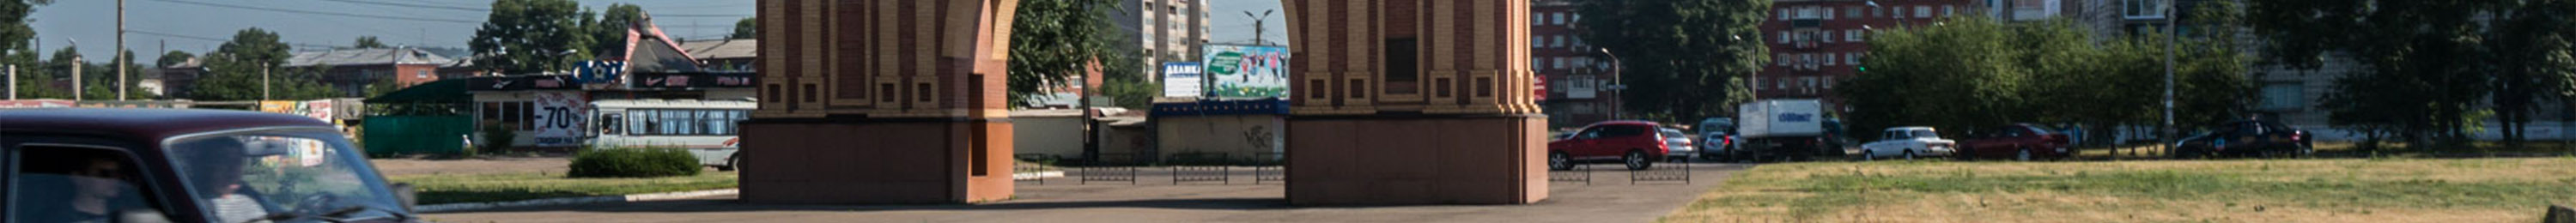 Панорама города Канск №1